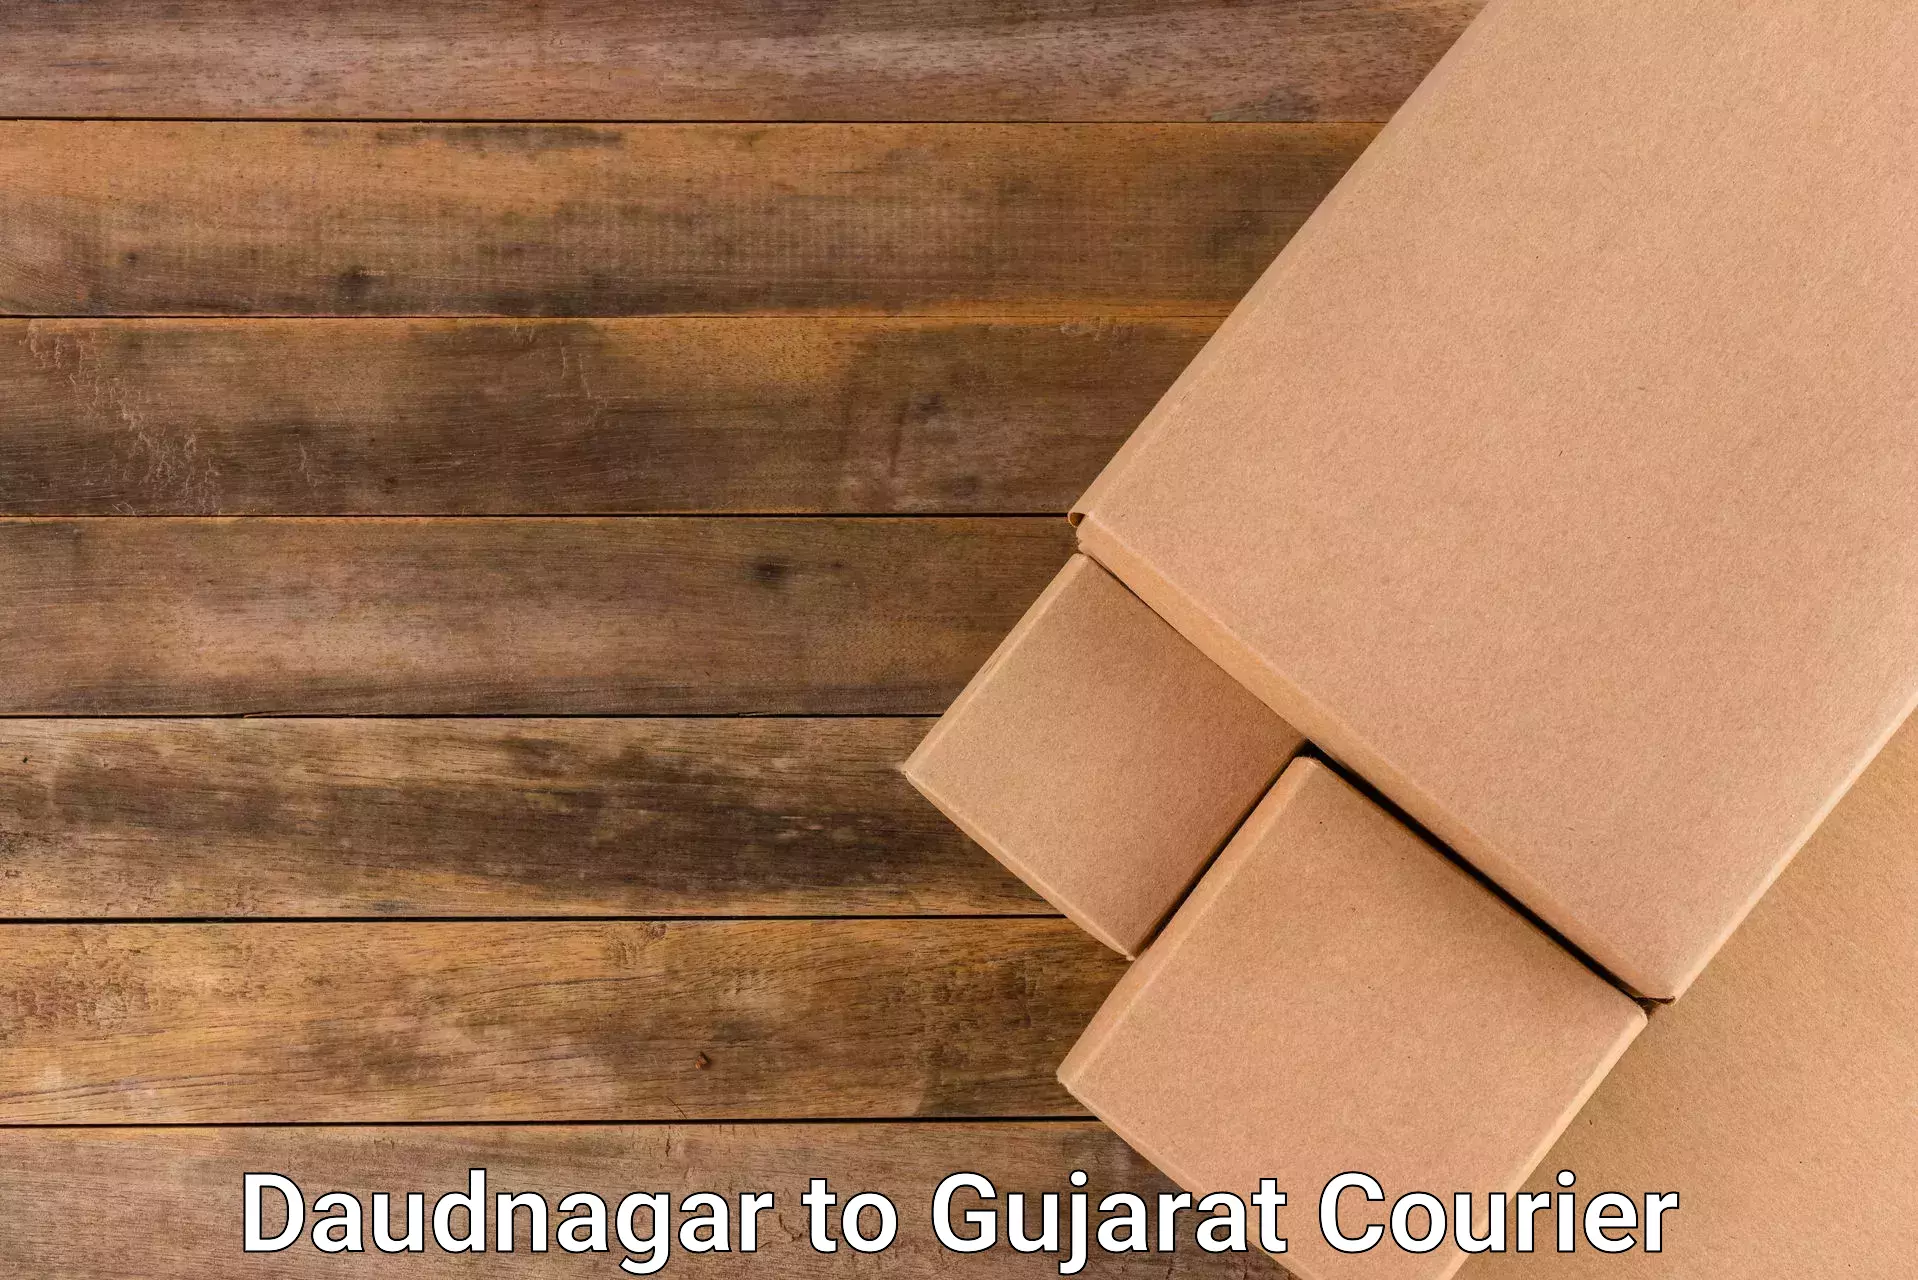 Courier service comparison Daudnagar to Bhanvad